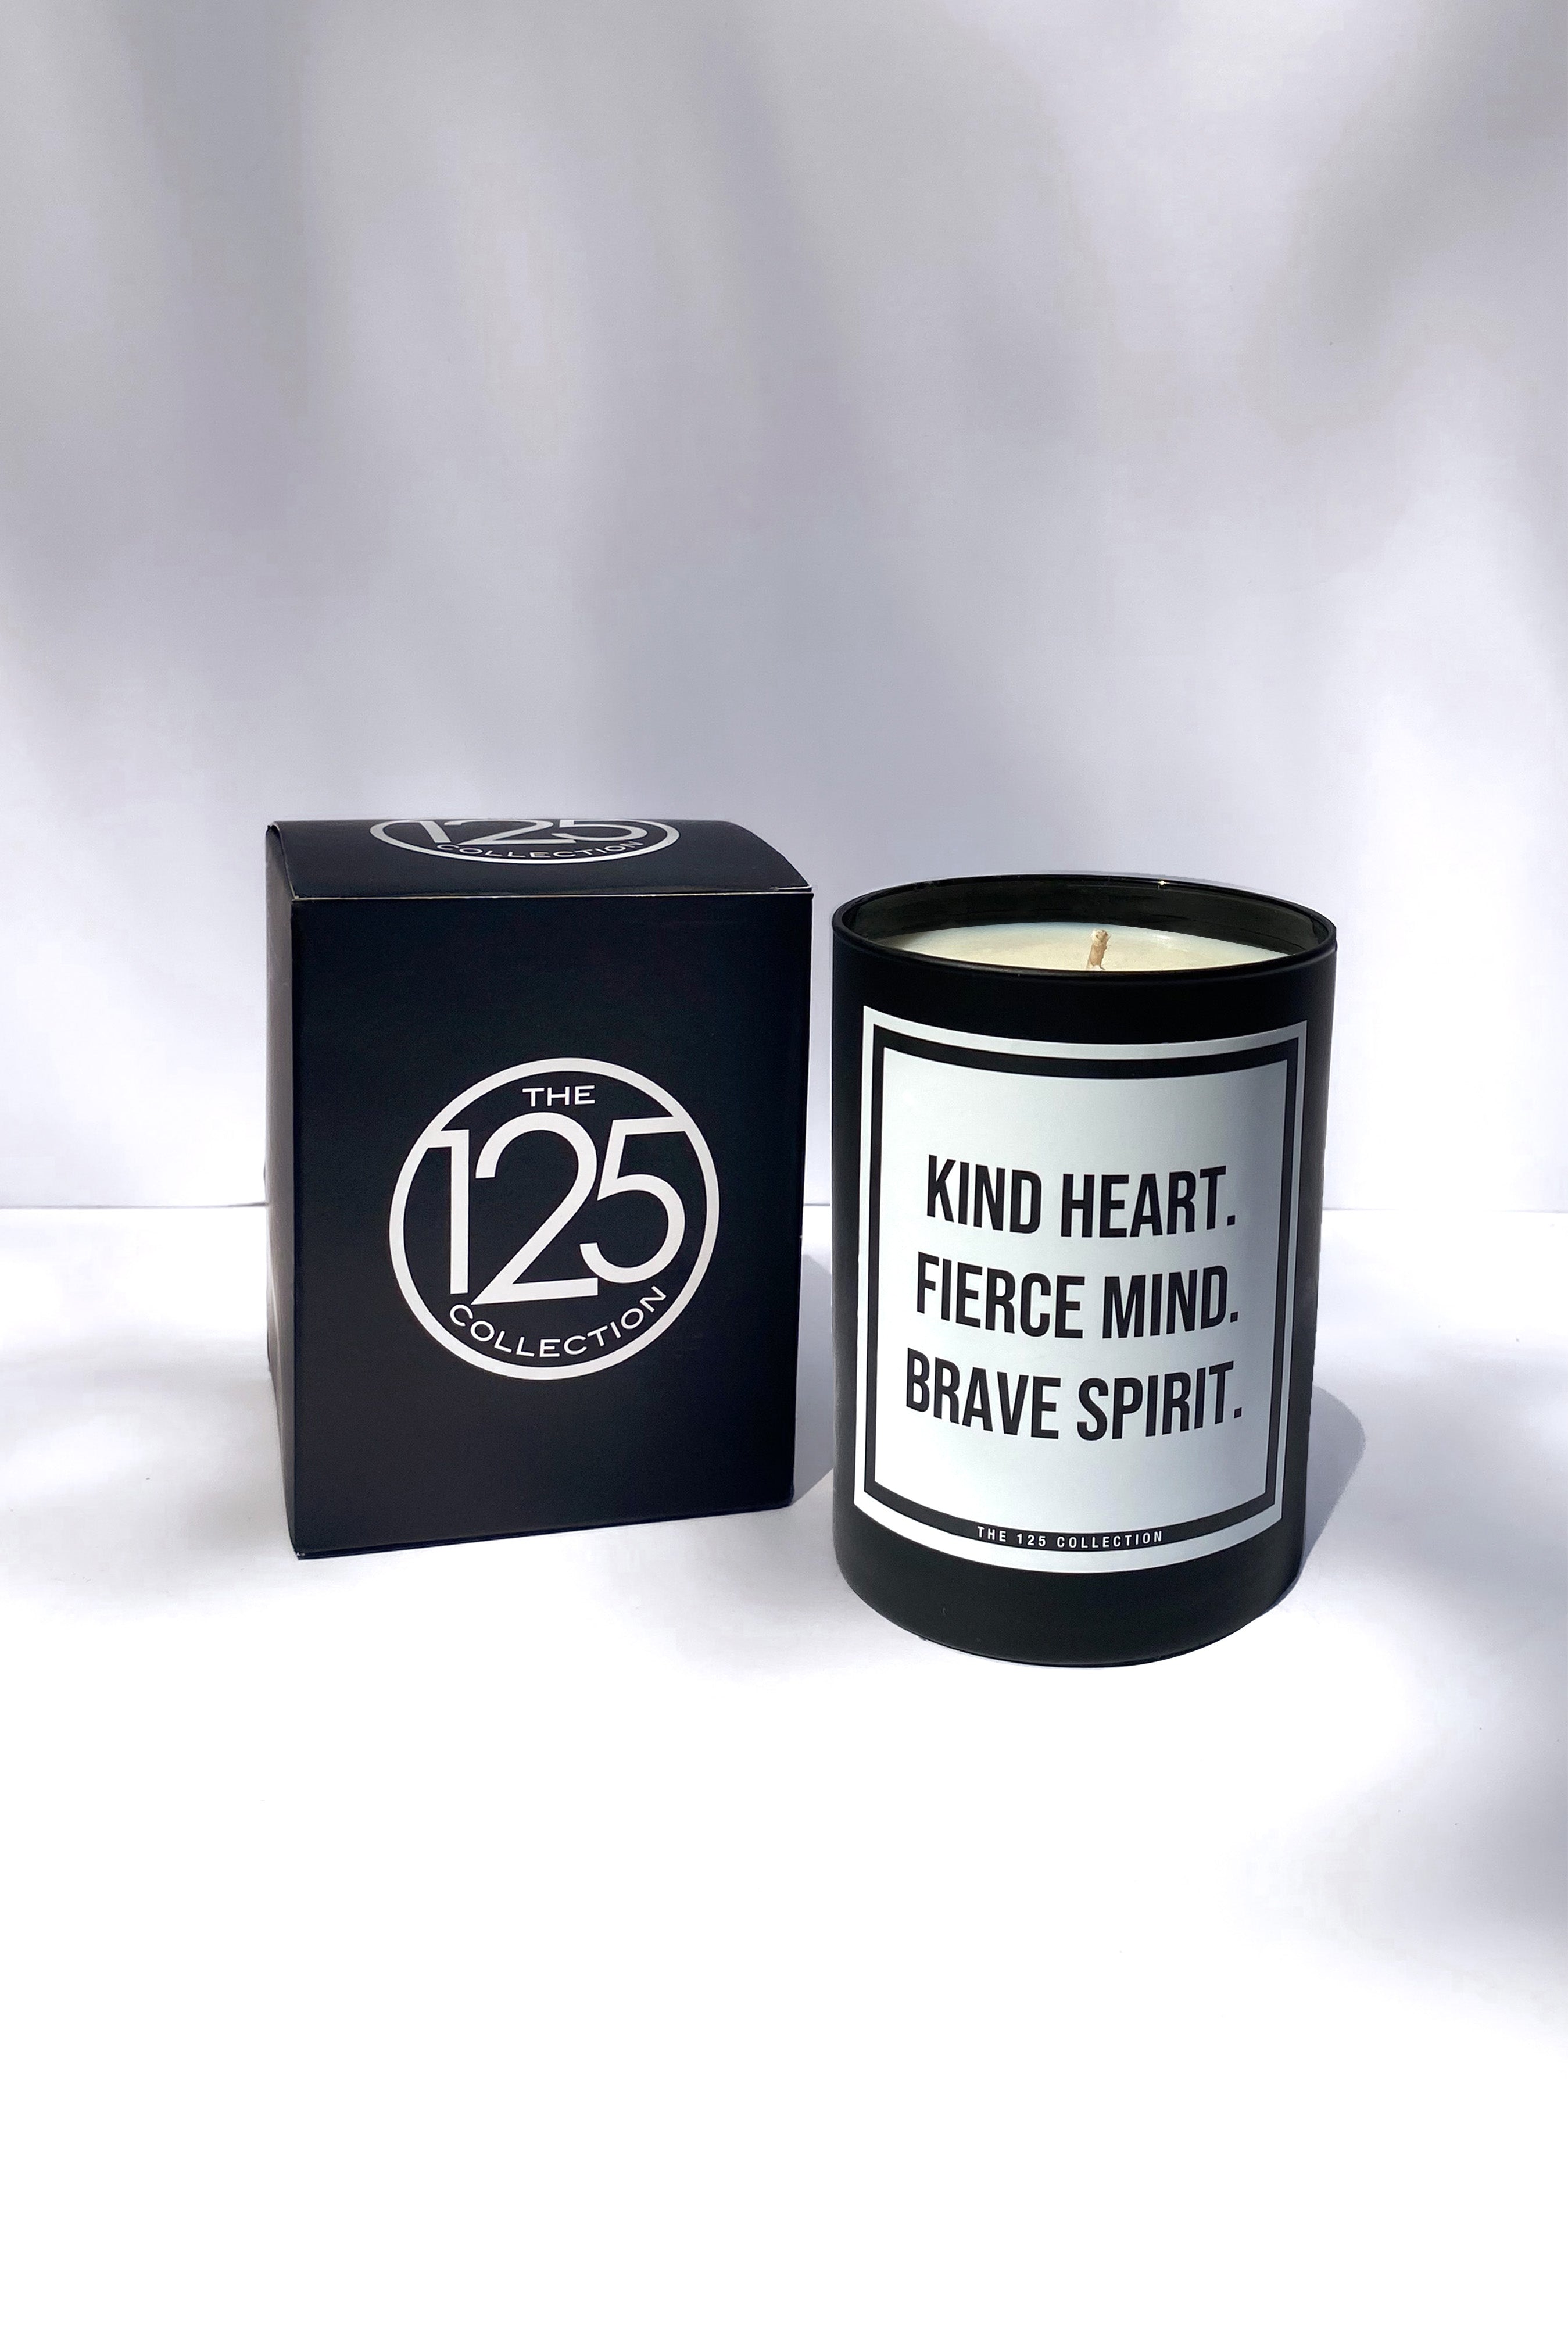 Kind Heart. Fierce Mind. Brave Spirit. – The 125 Collection